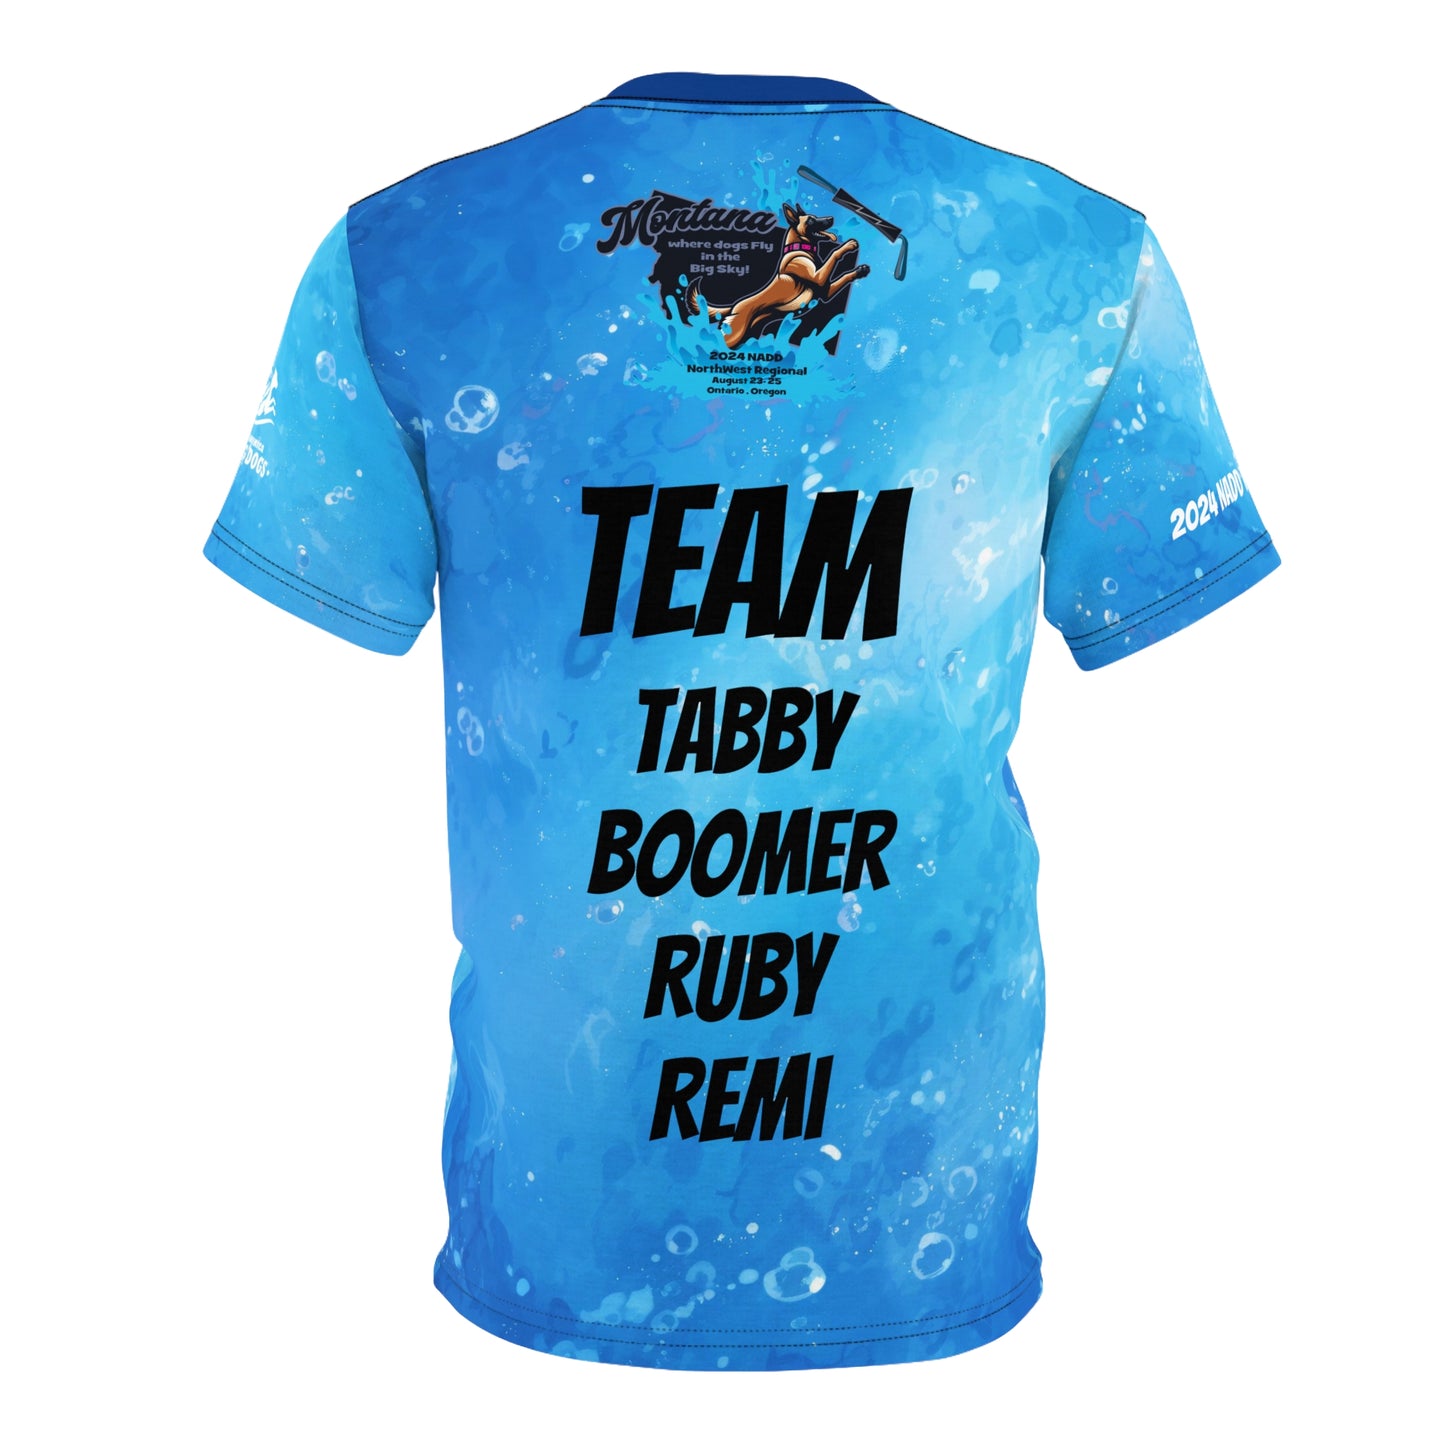 *Team Tabby Boomer Ruby Remi - MONTANA NADD Unisex JERSEY